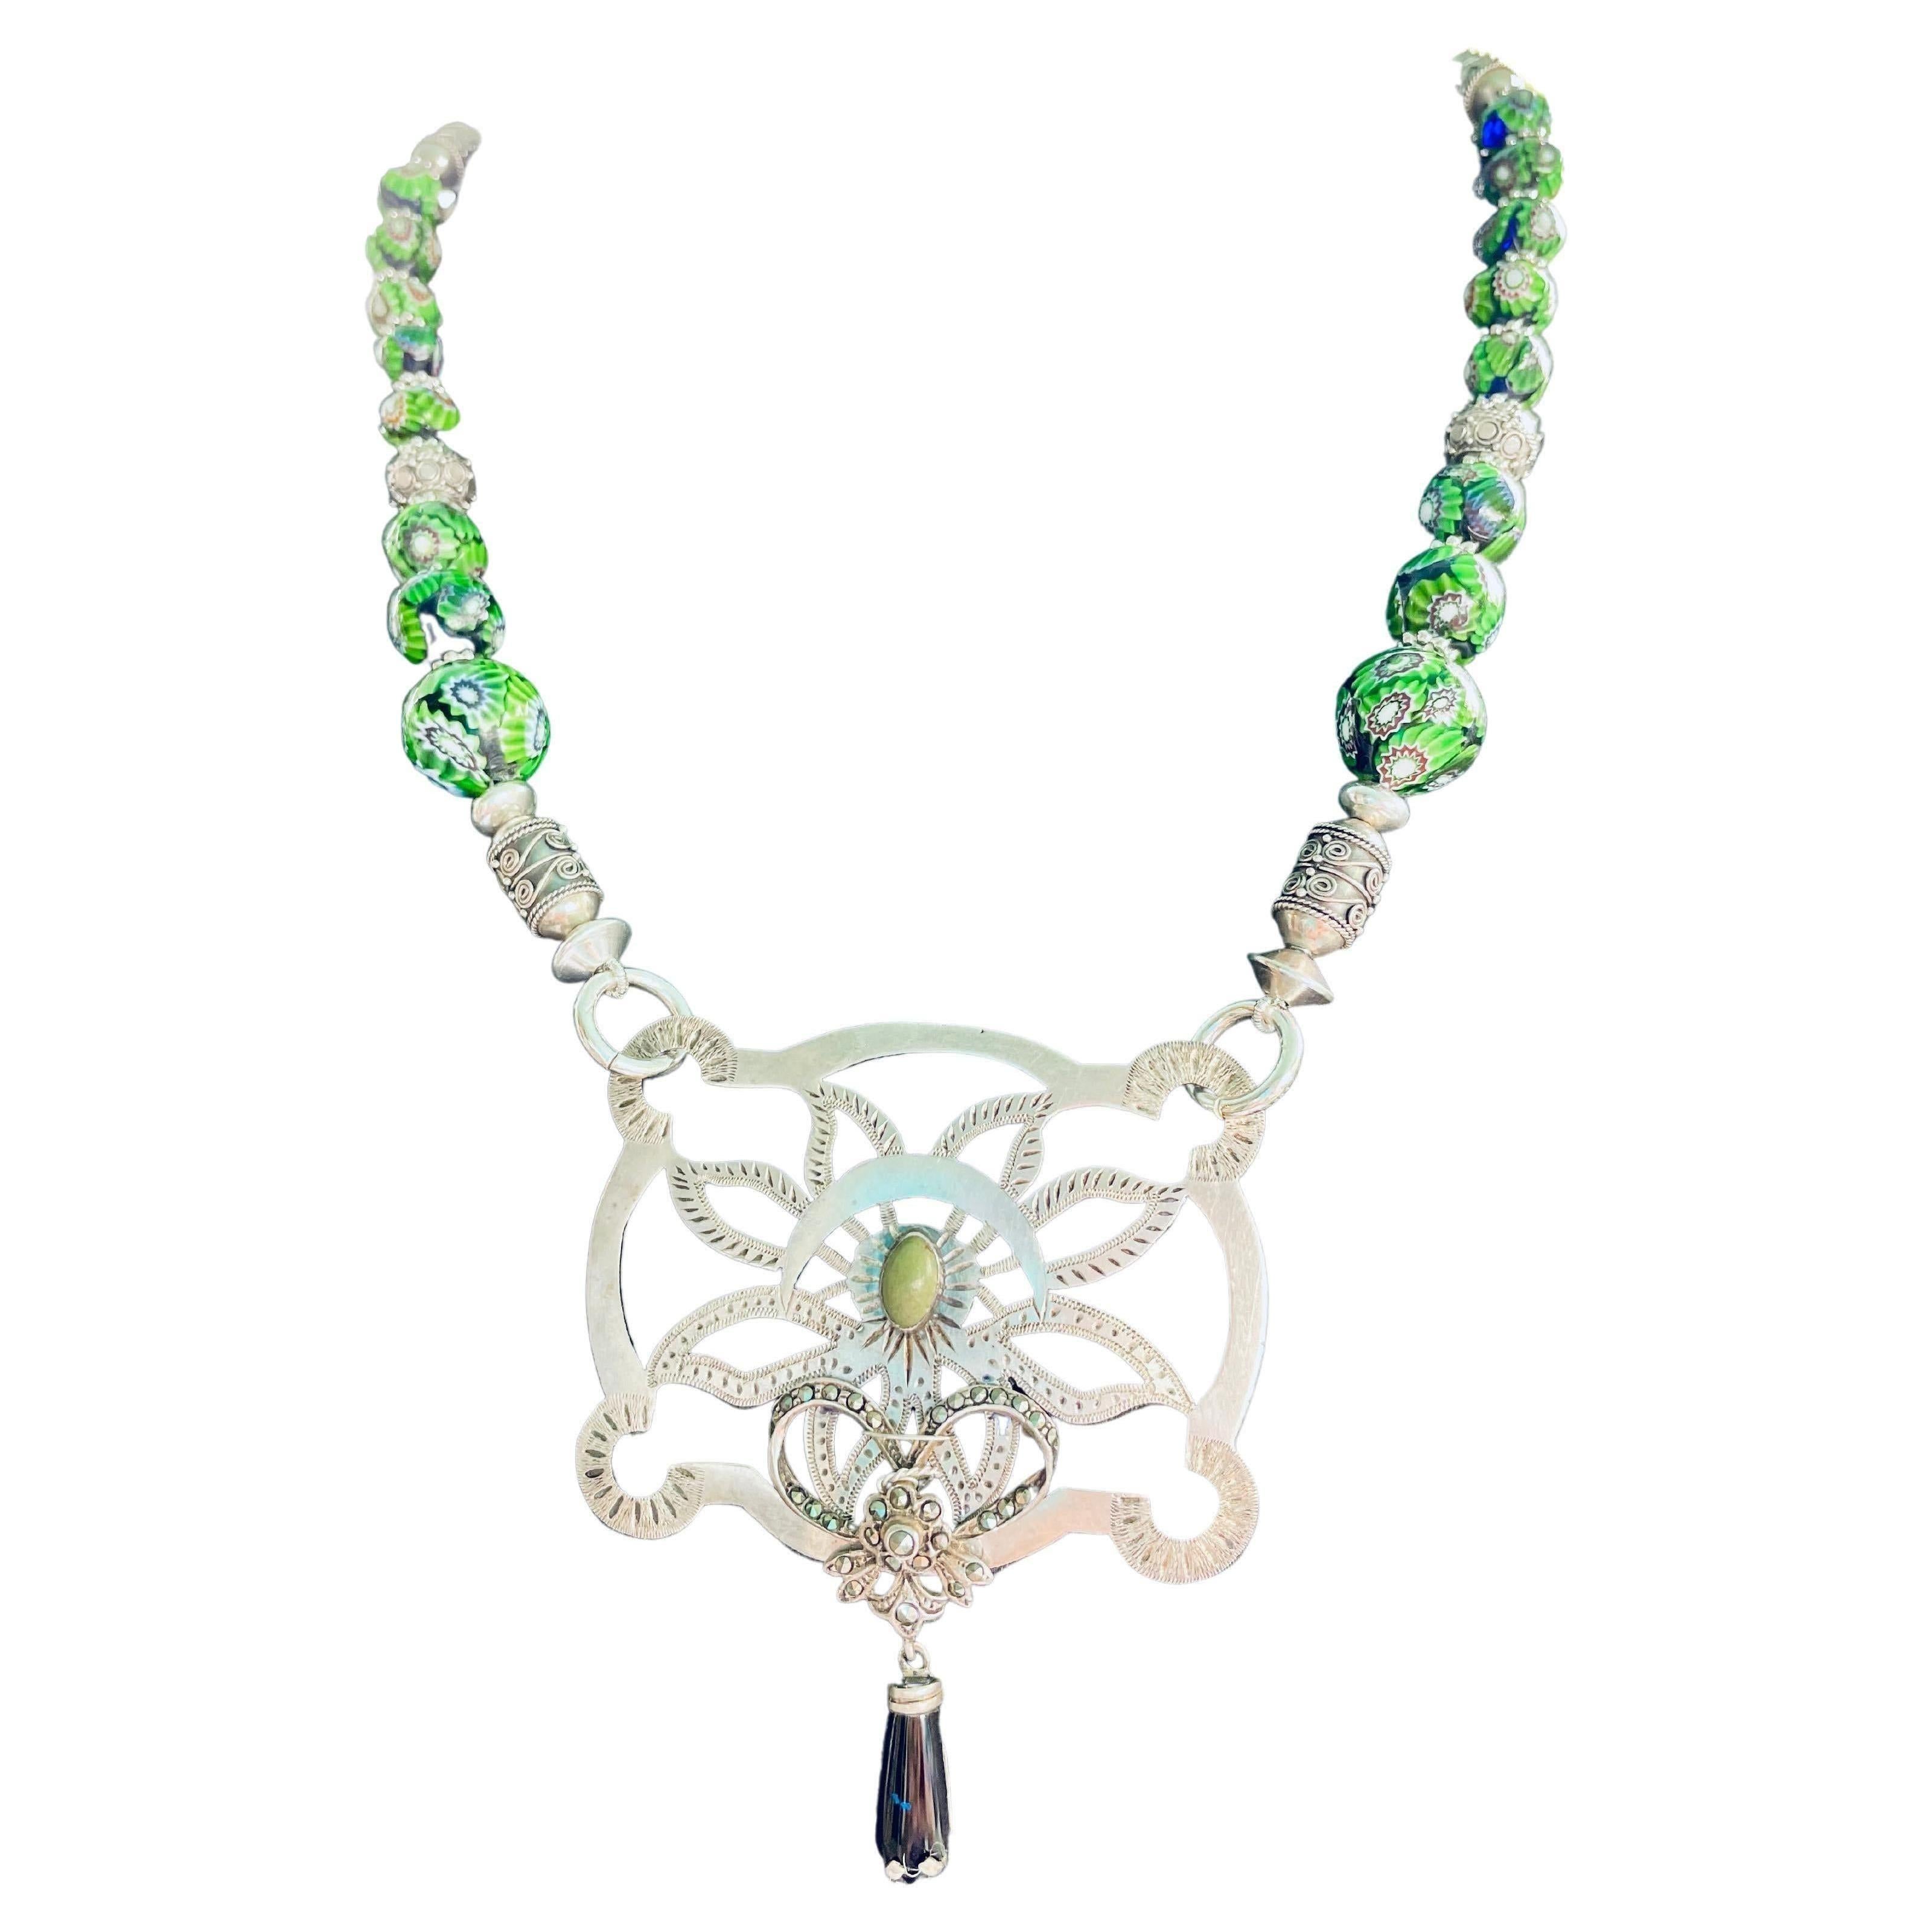 Lorraine’s Bijoux presents a one of a kind Art Deco pendant on Venetian beads For Sale